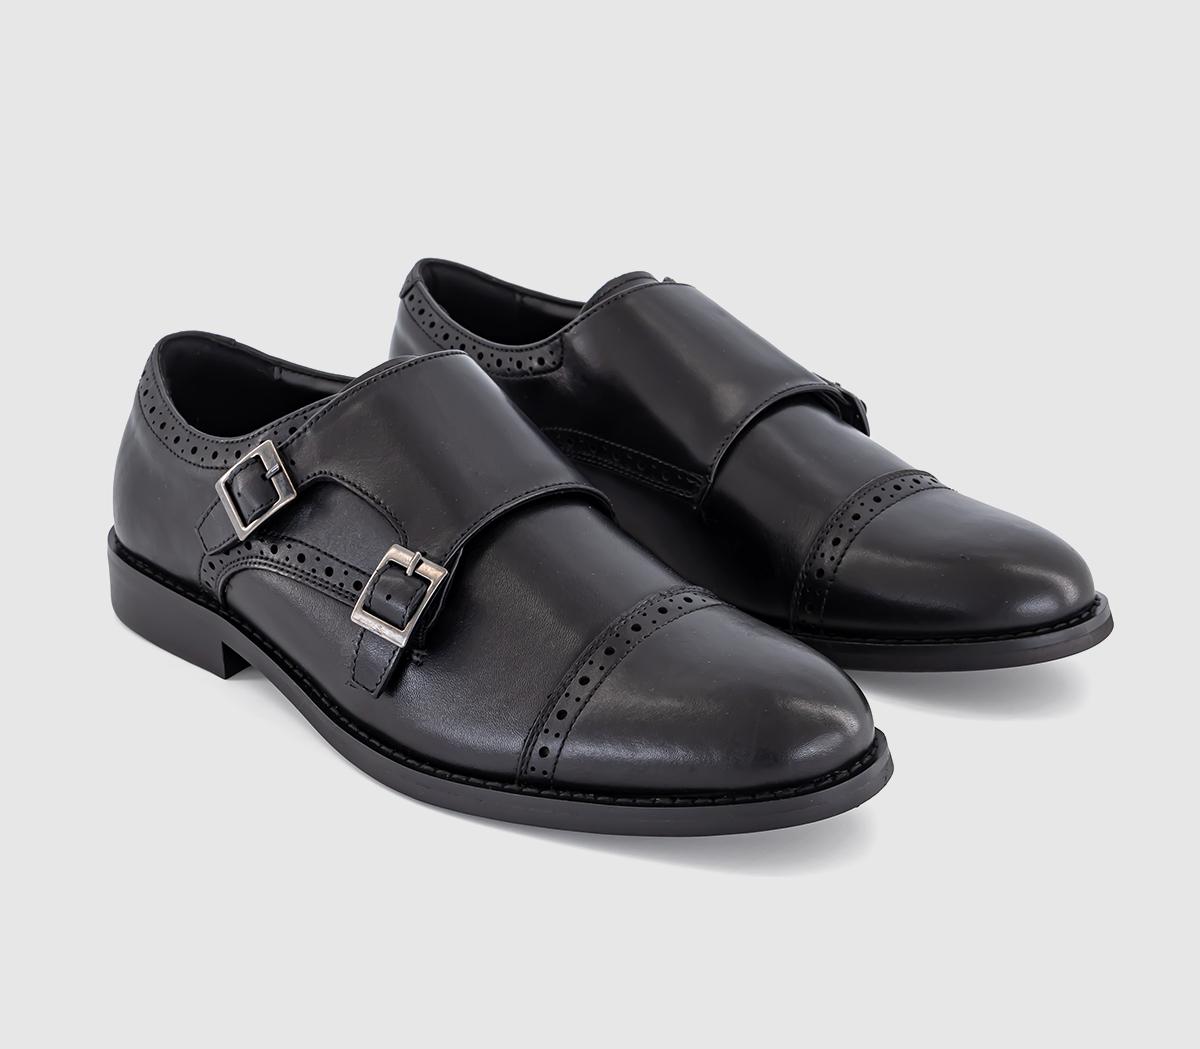 OFFICE Mens Myles Double Strap Monk Shoes Black Leather, 10